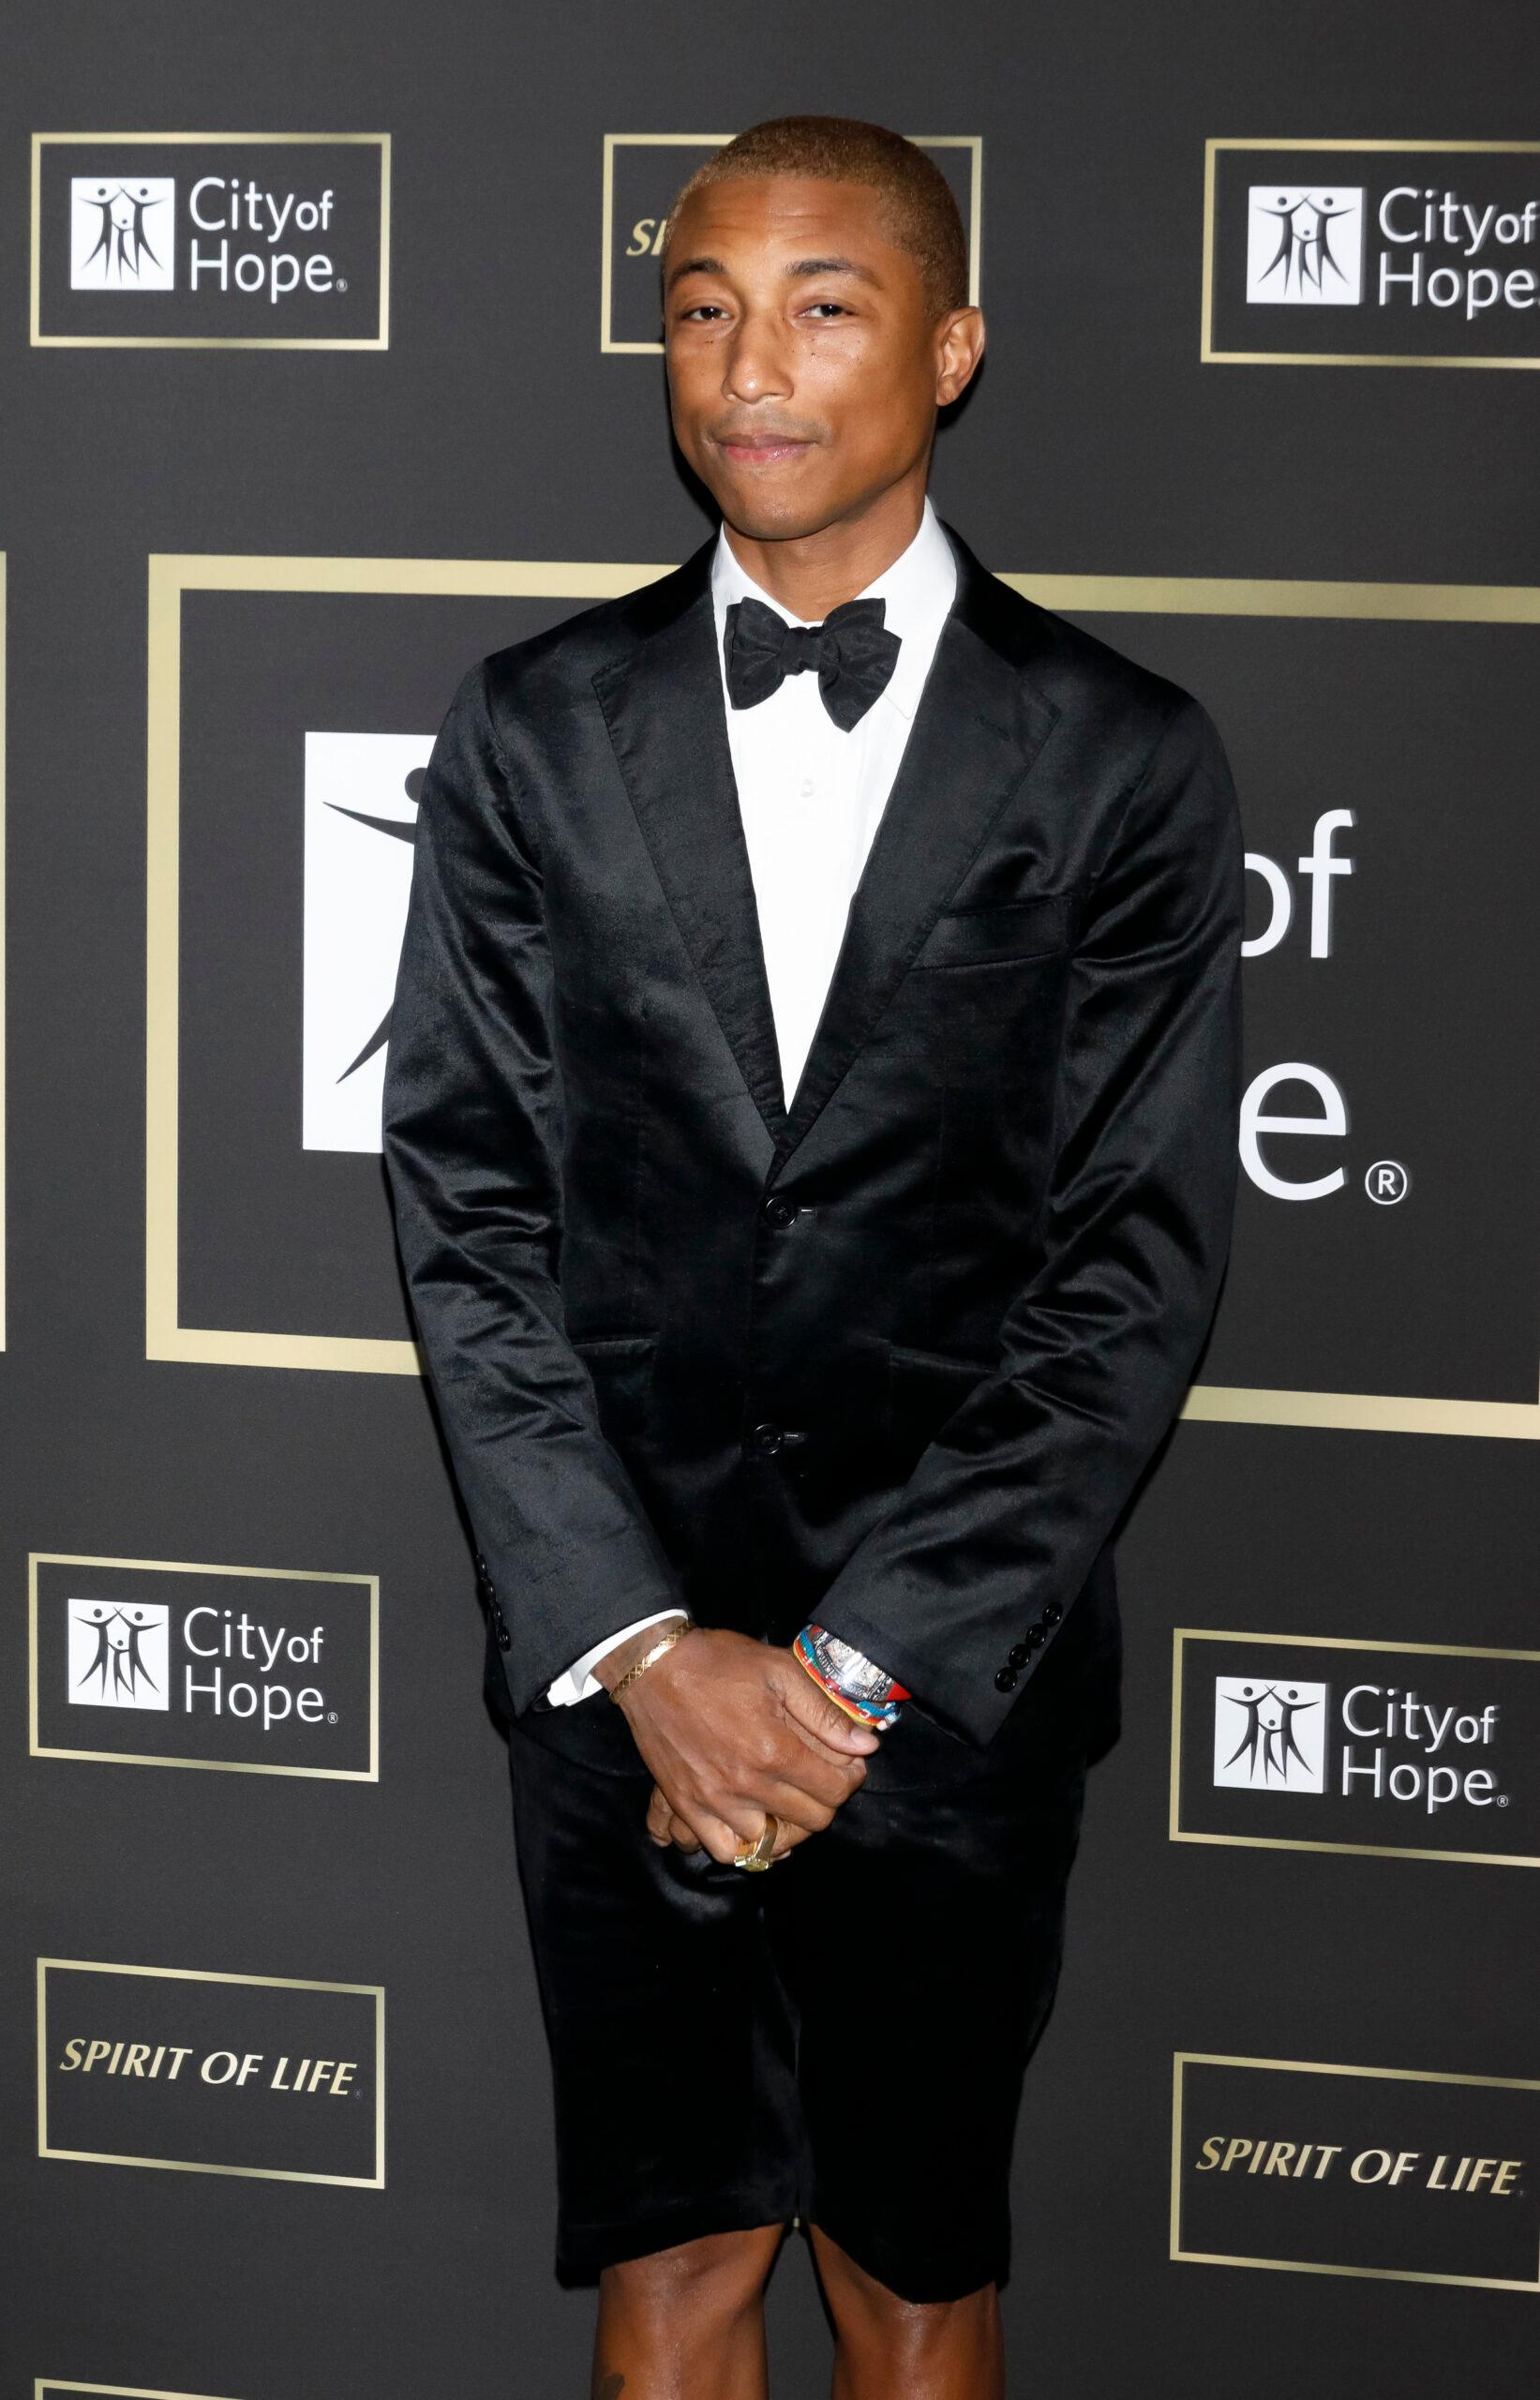 Pharrell Williams at the 2018 City of Hope Gala